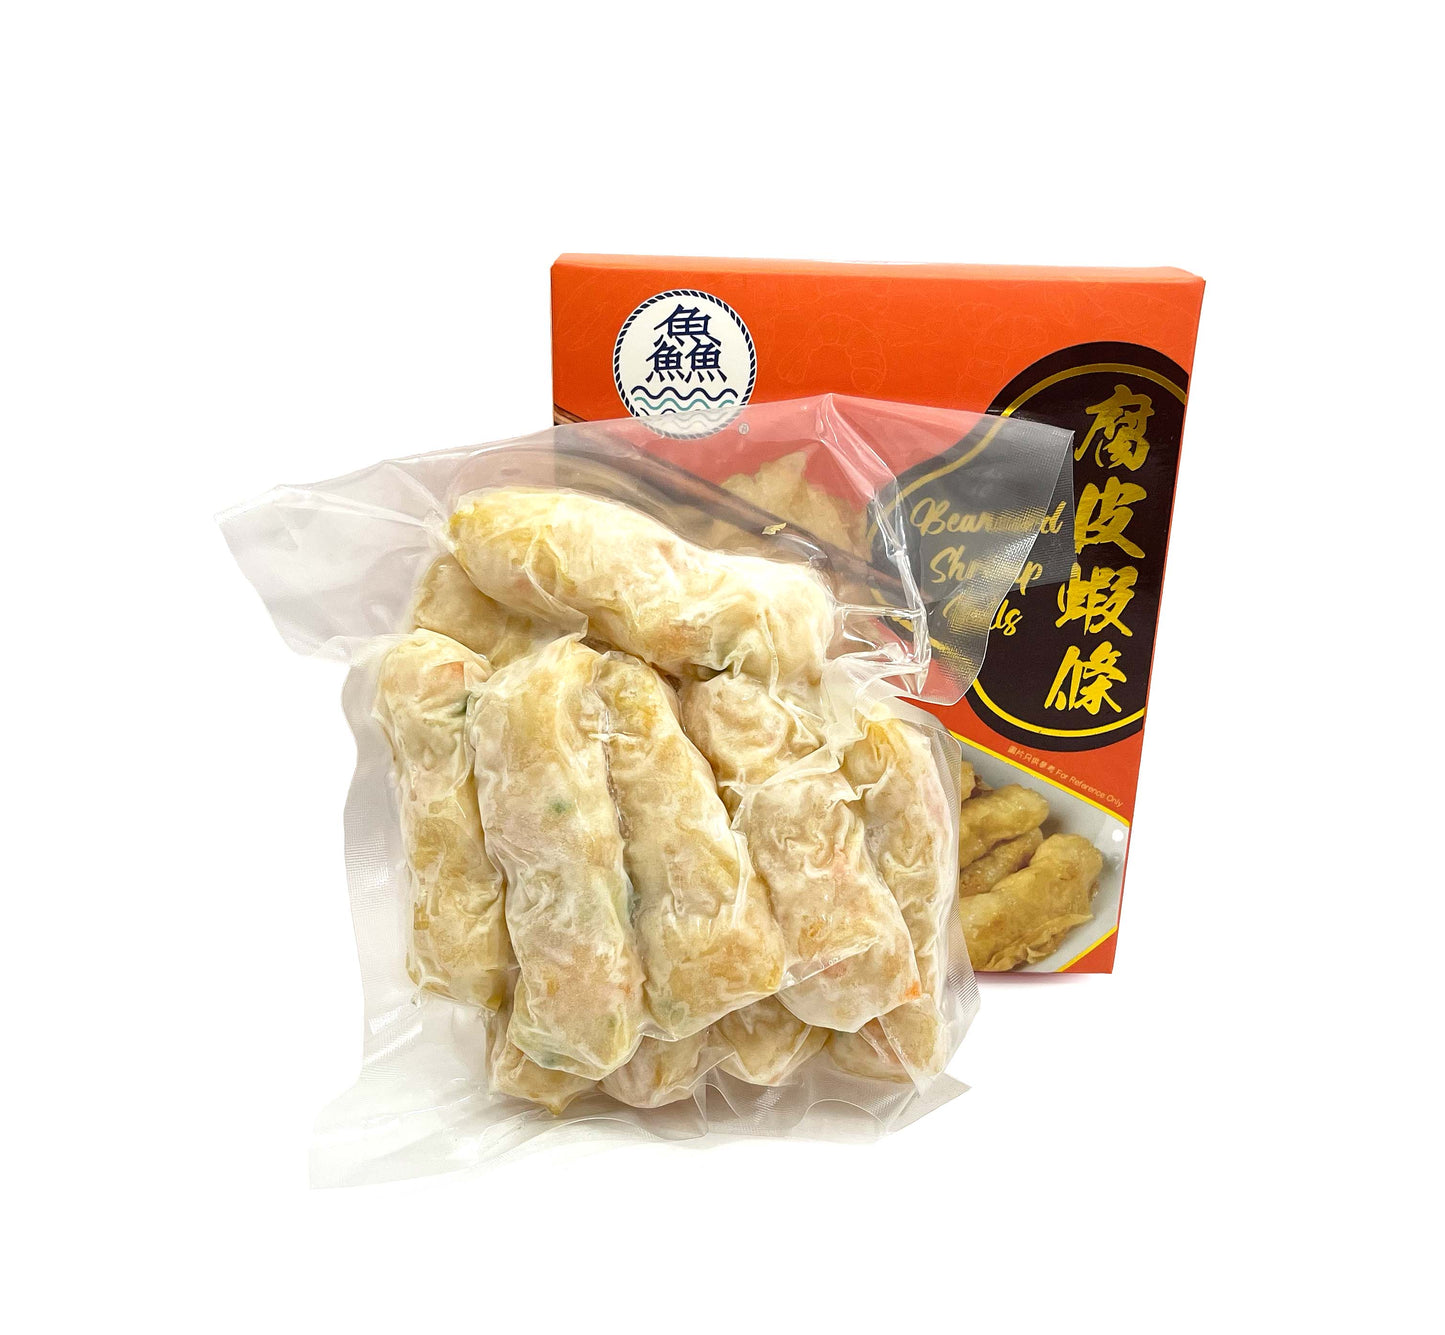 Beancurd Shrimp Rolls 腐皮蝦條 (3Fish Brand)